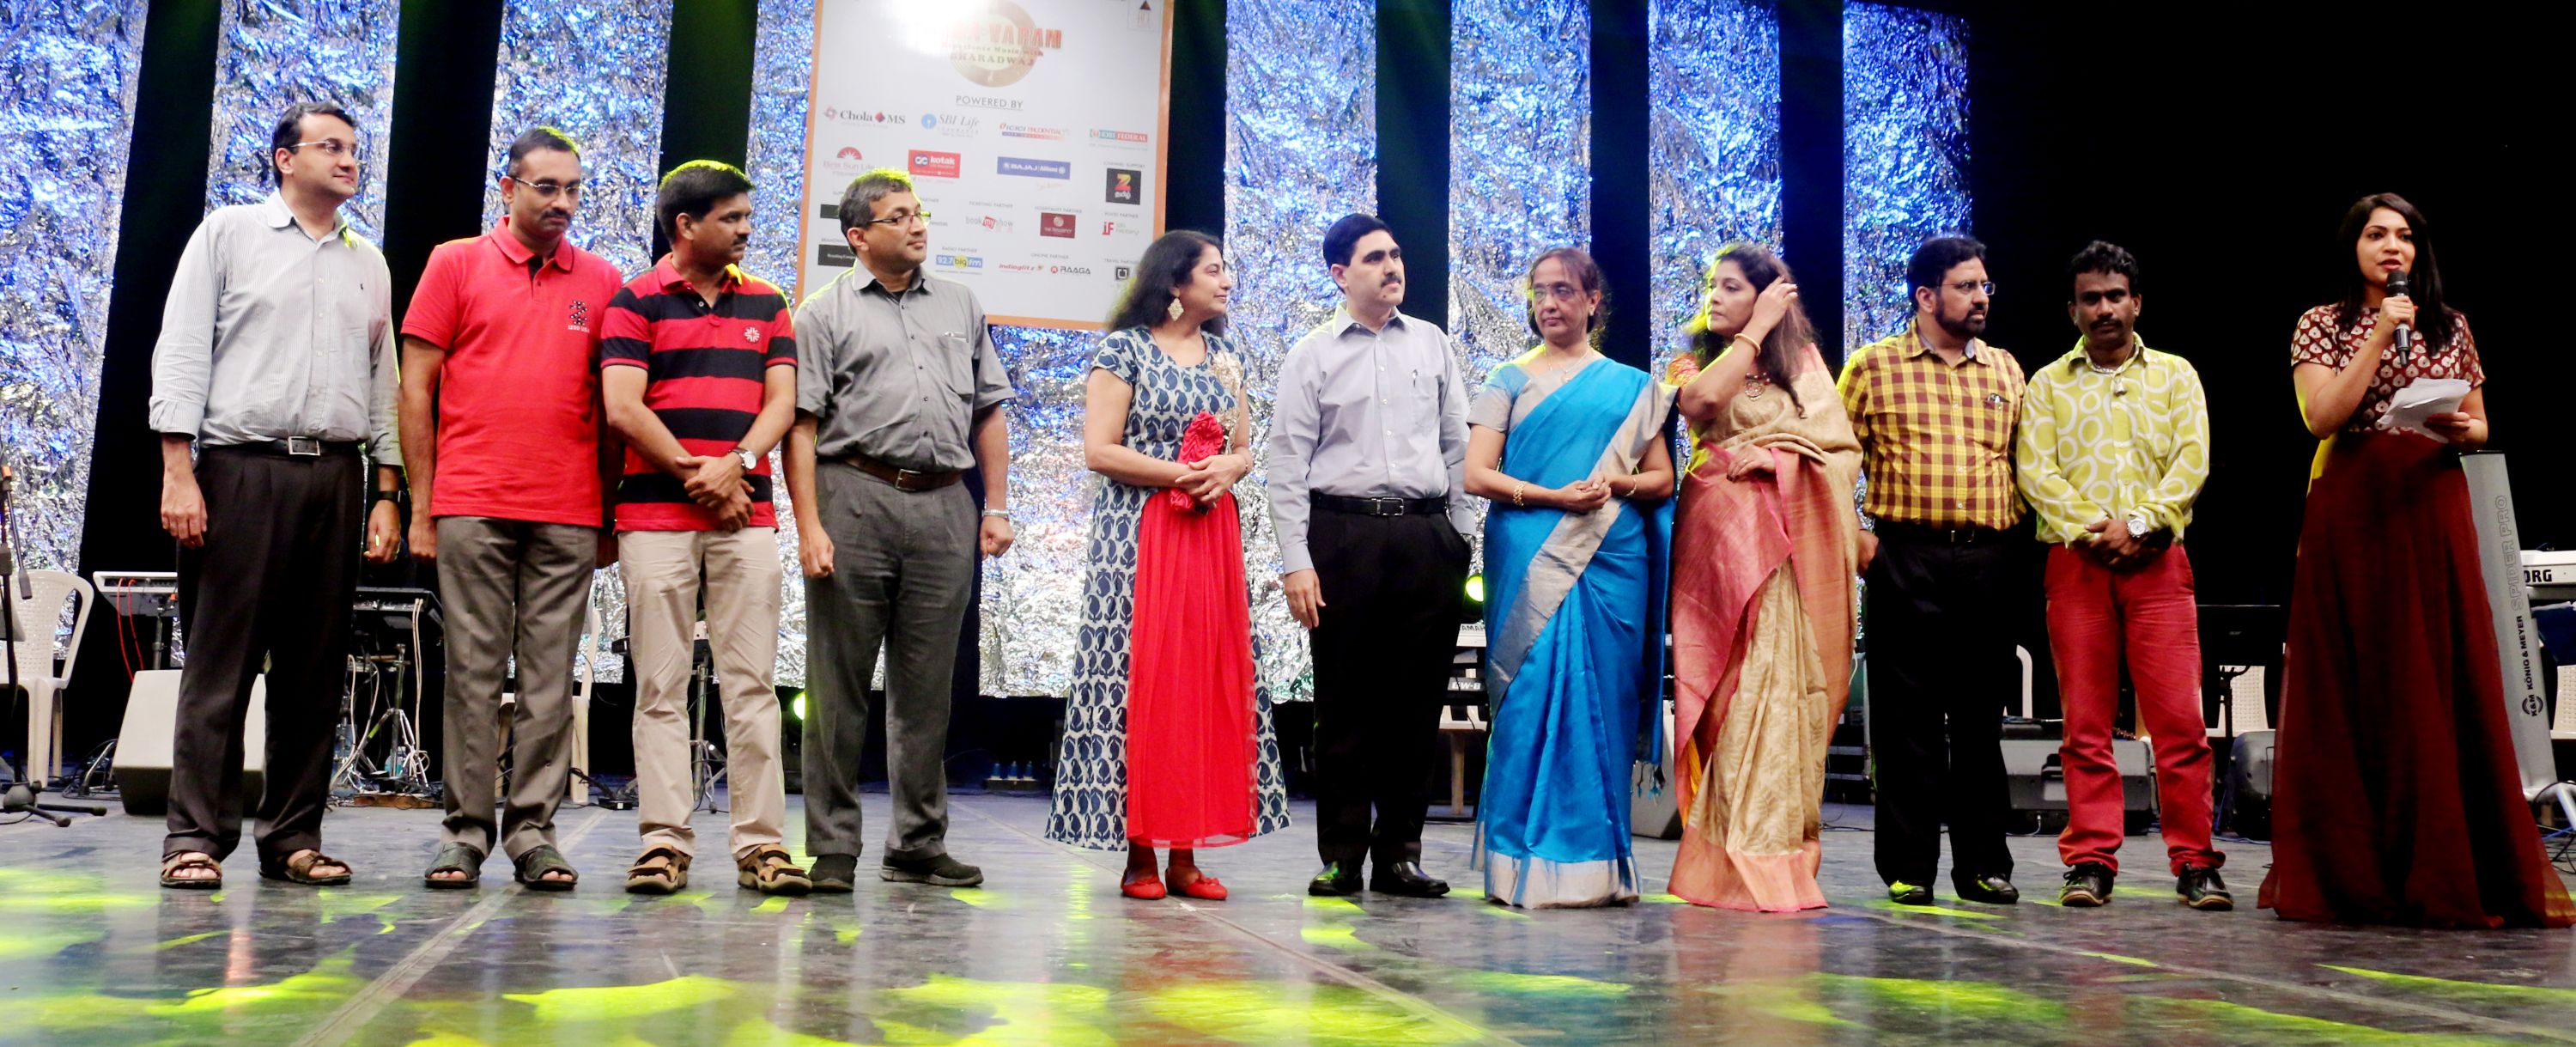 Saga Foundation In Saagavaram Music Show Event Pics (7)